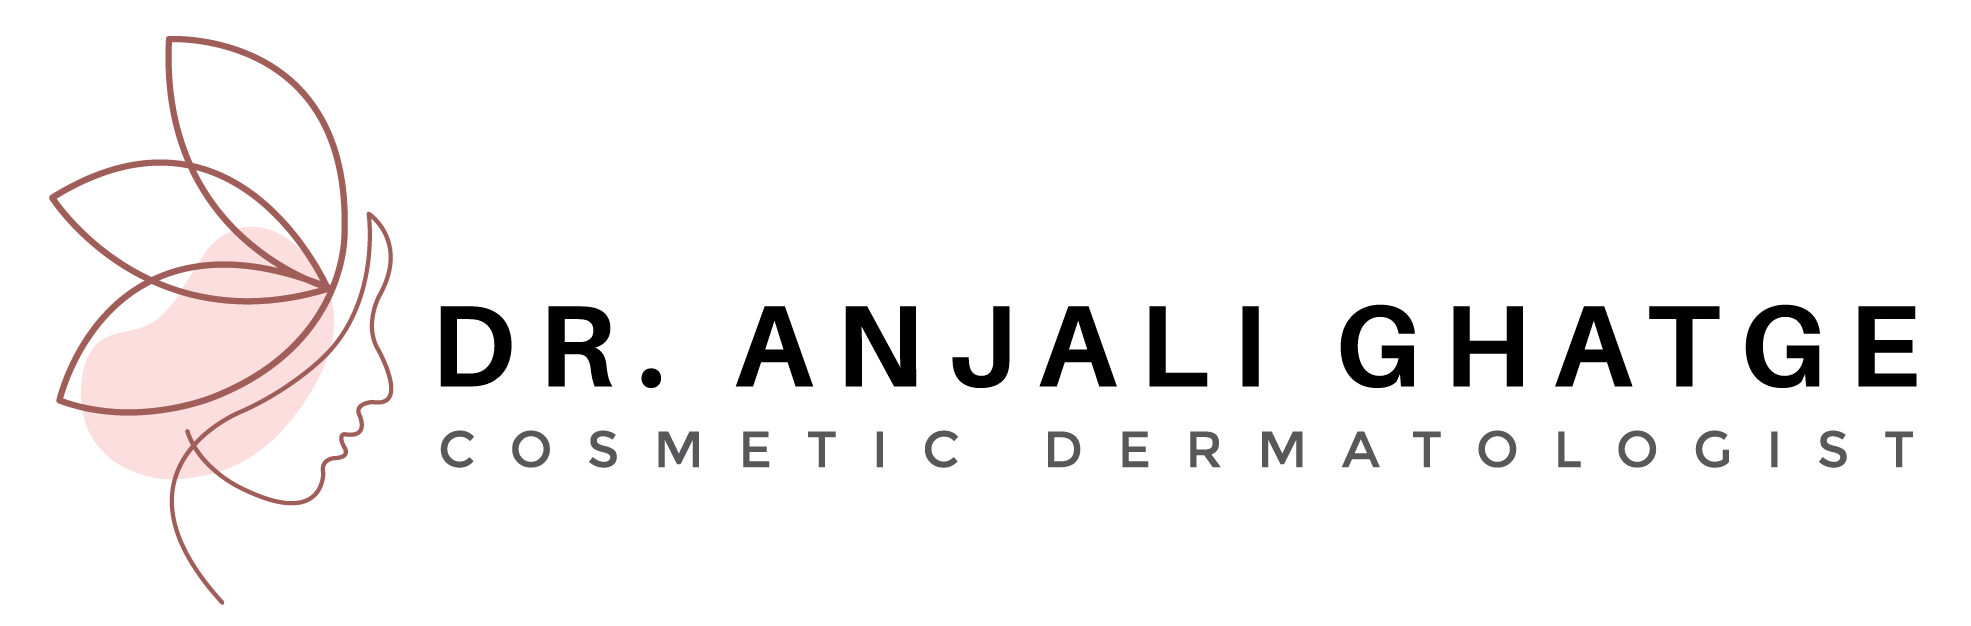 Cosmetic Dermatology Blog